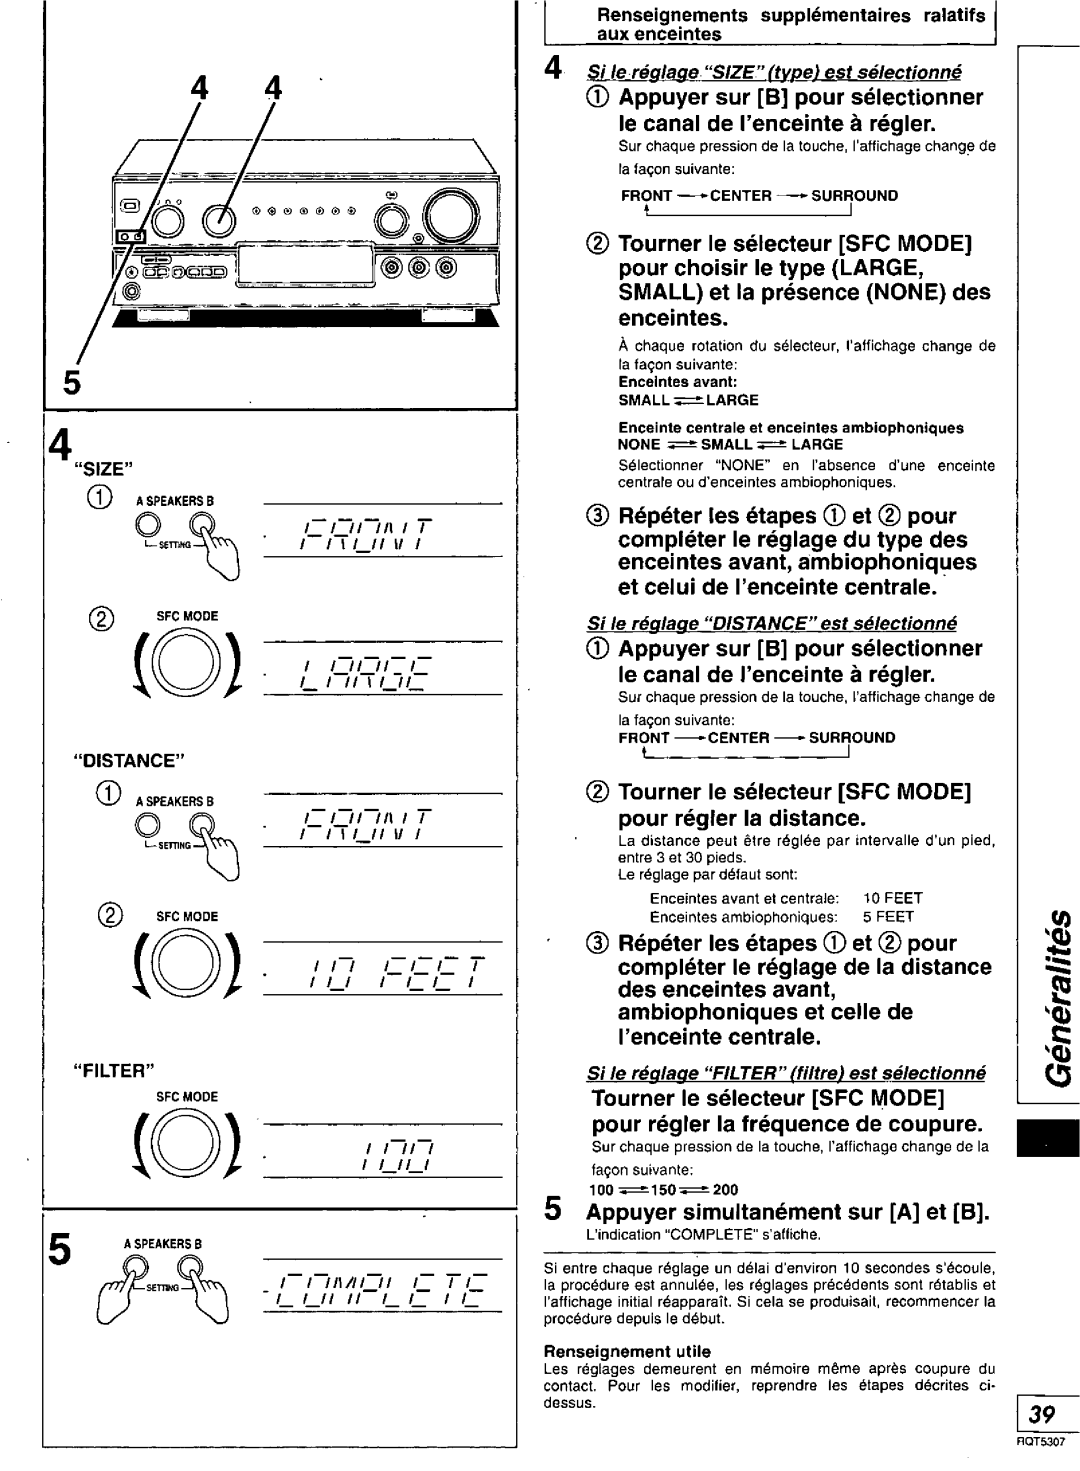 Panasonic SC-HT275, SC-HT280 manual 